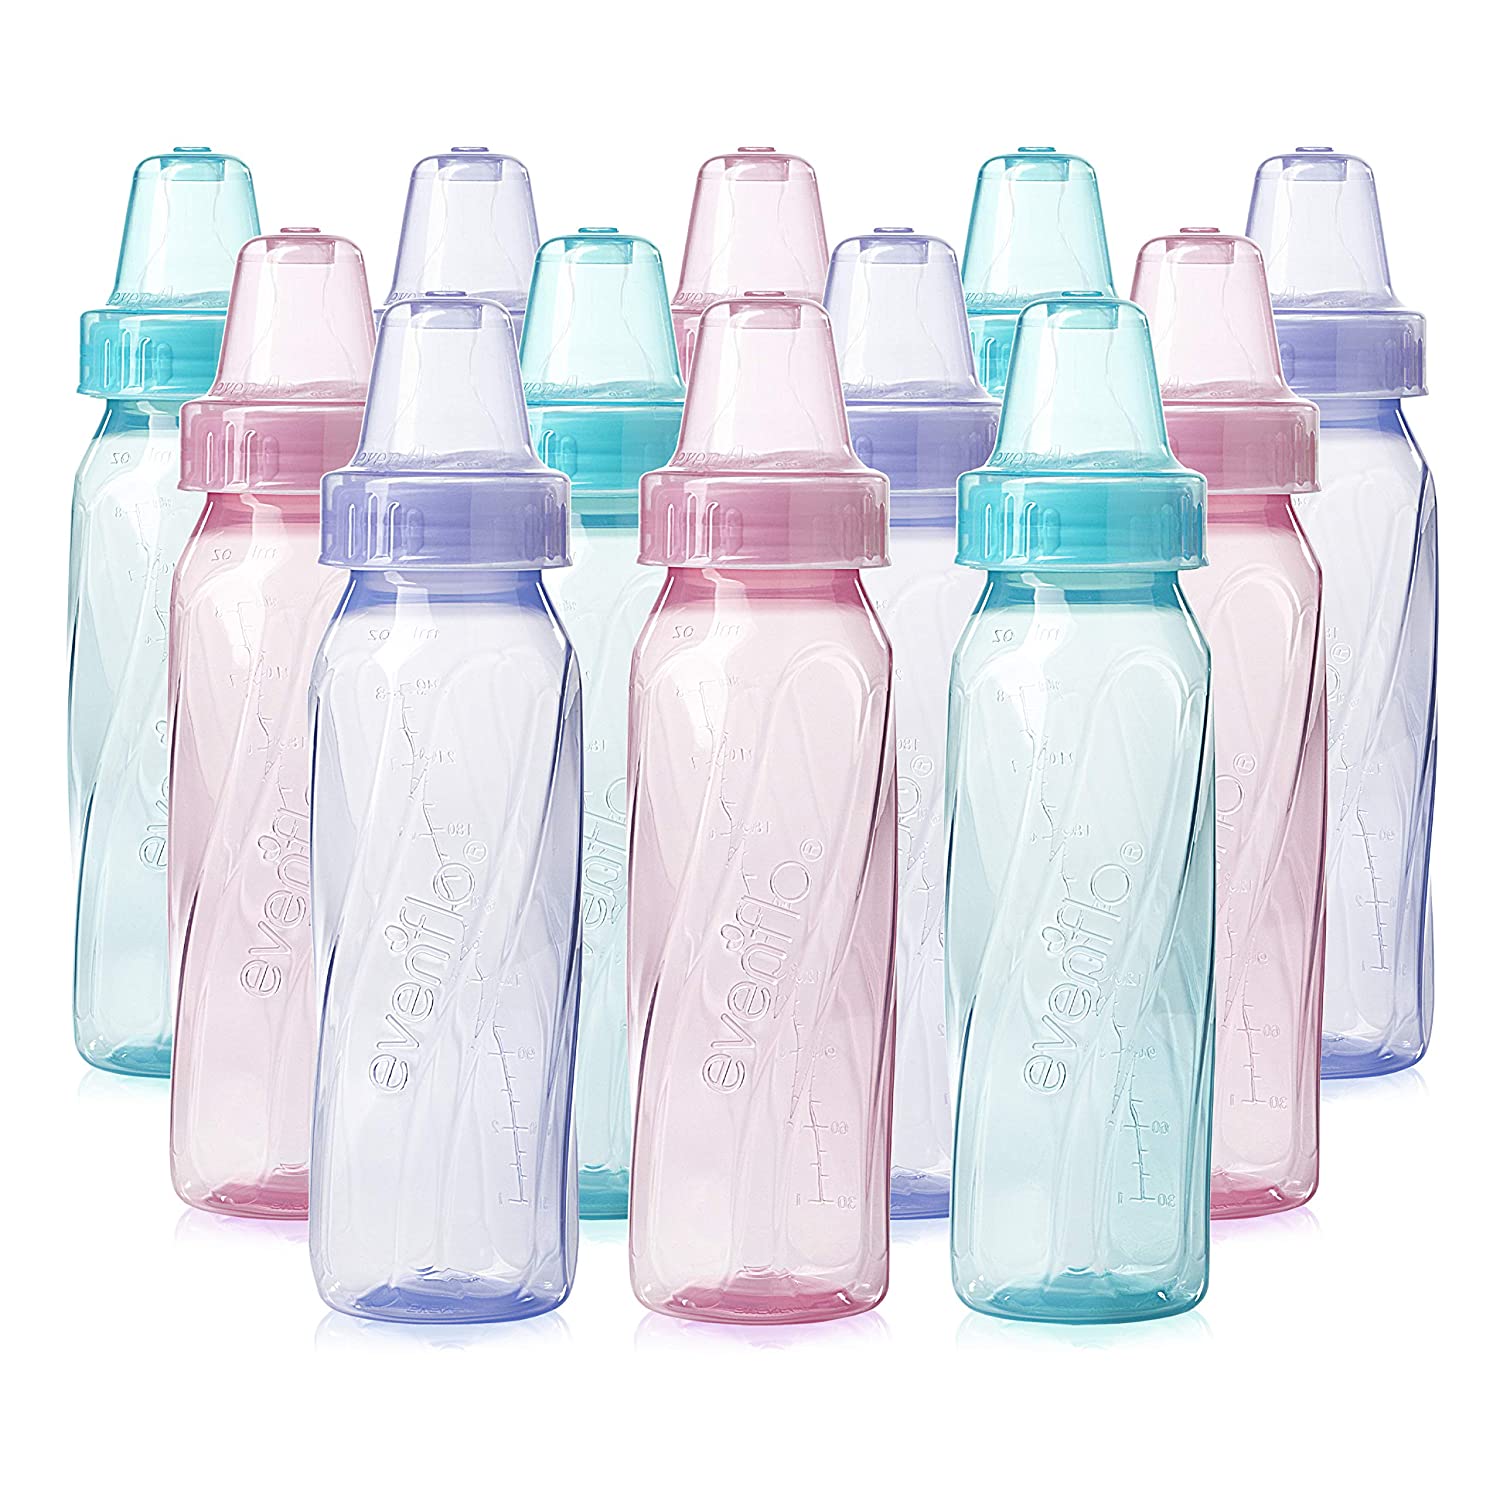 Evenflo Feeding Classic Tinted Plastic Baby Bottles, 12-Pack